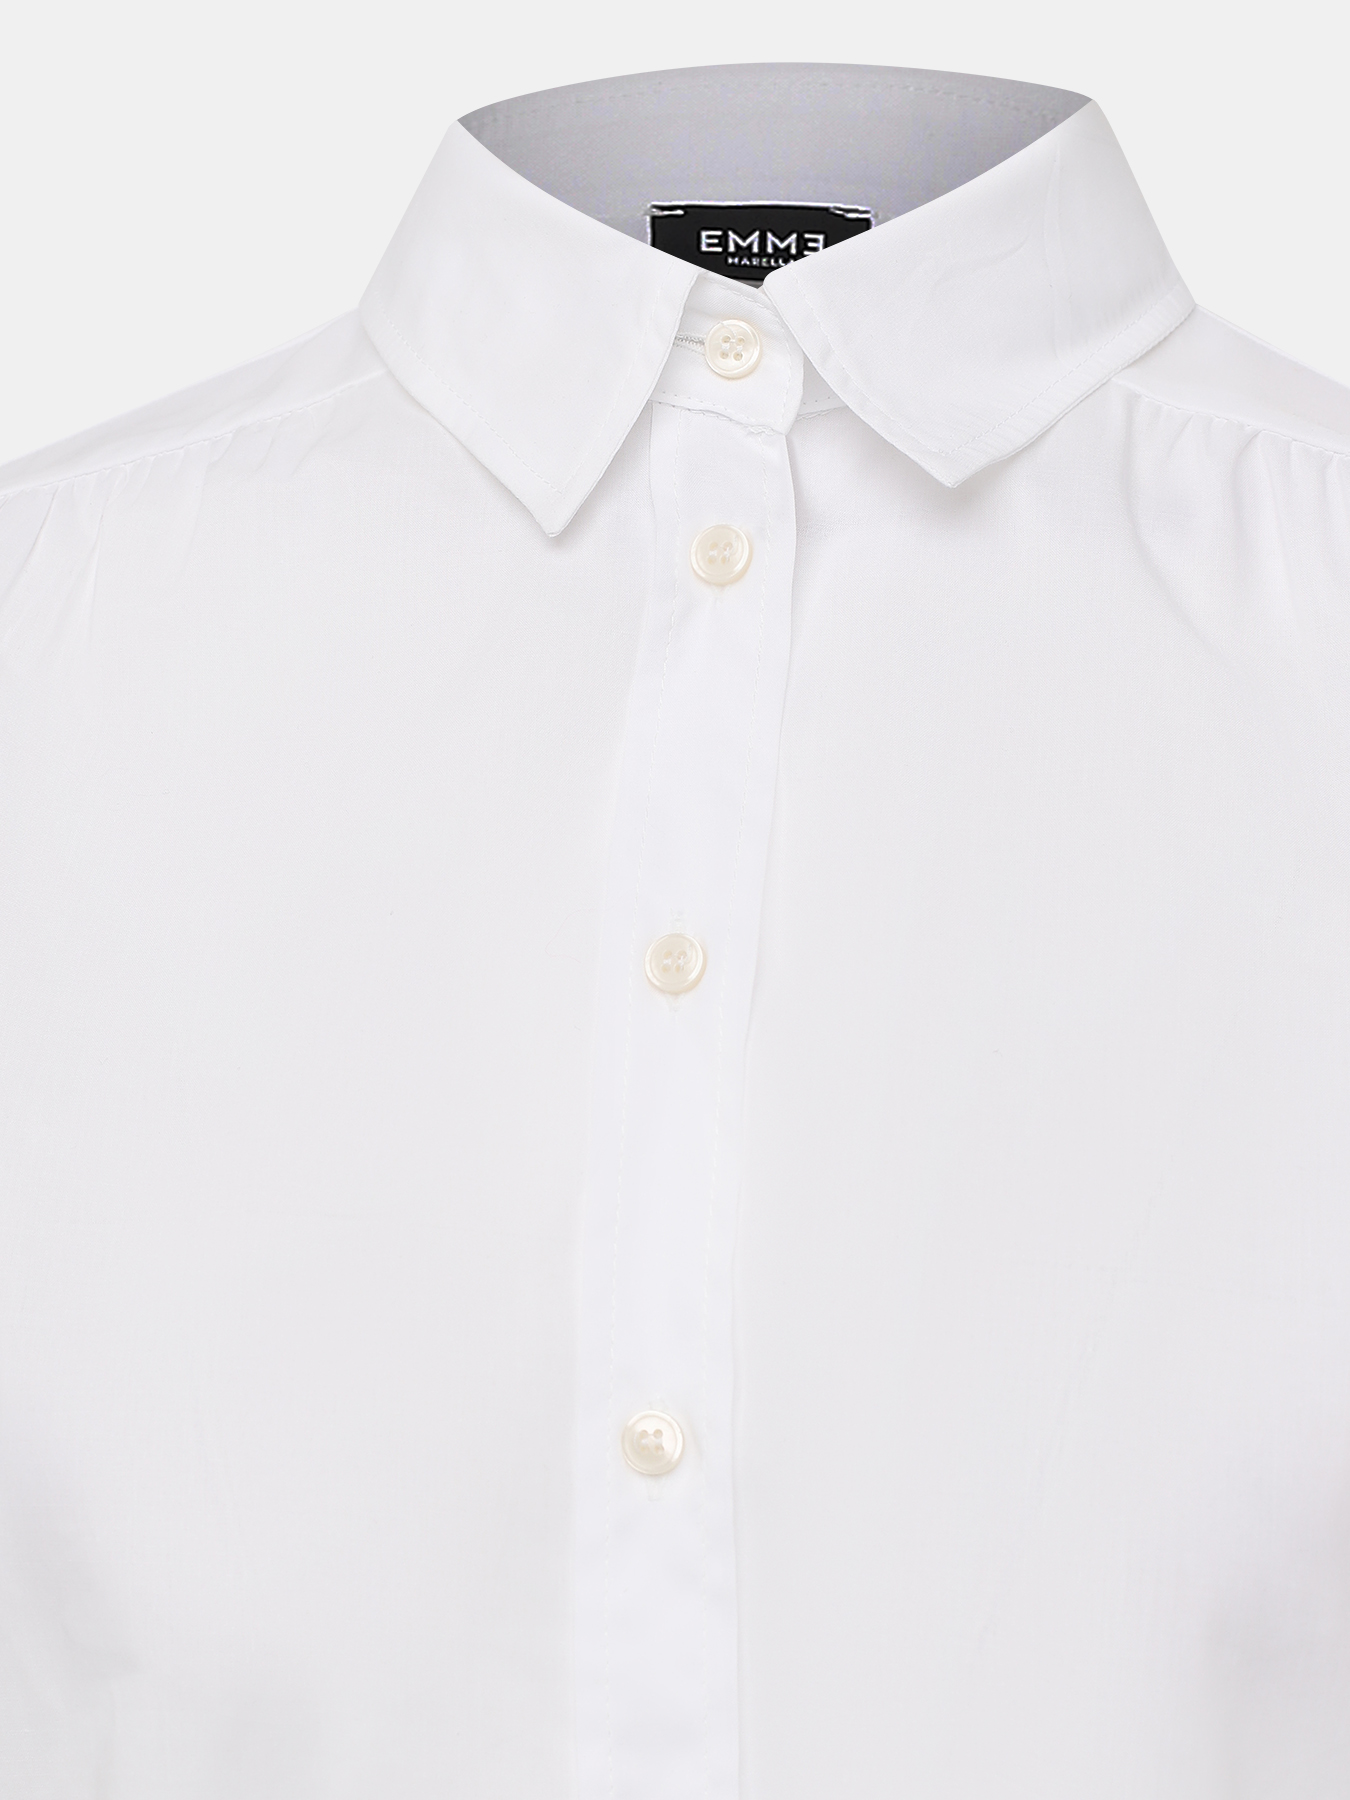 Блузка Fianco Emme Marella 422843-020, цвет белый, размер 40 - фото 3